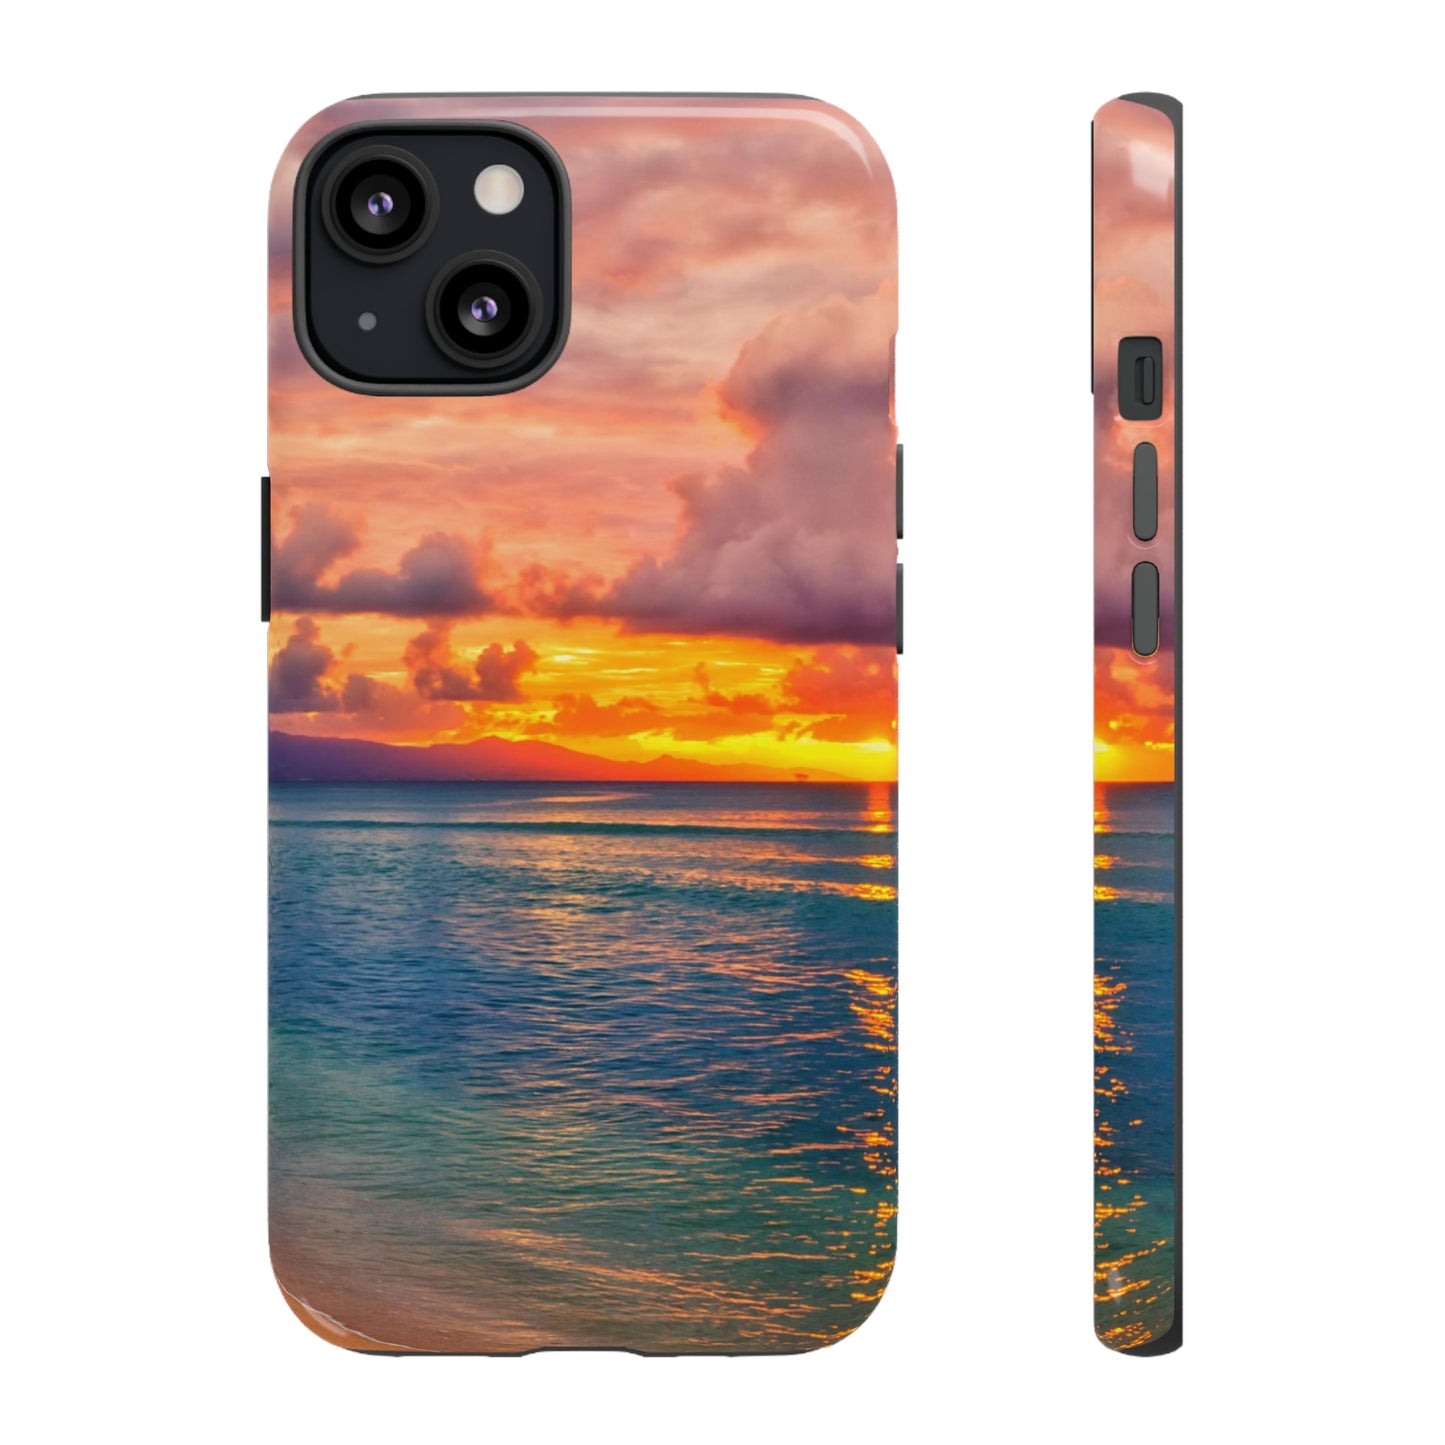 Sunset Beach Seashore Tough Phone Cases